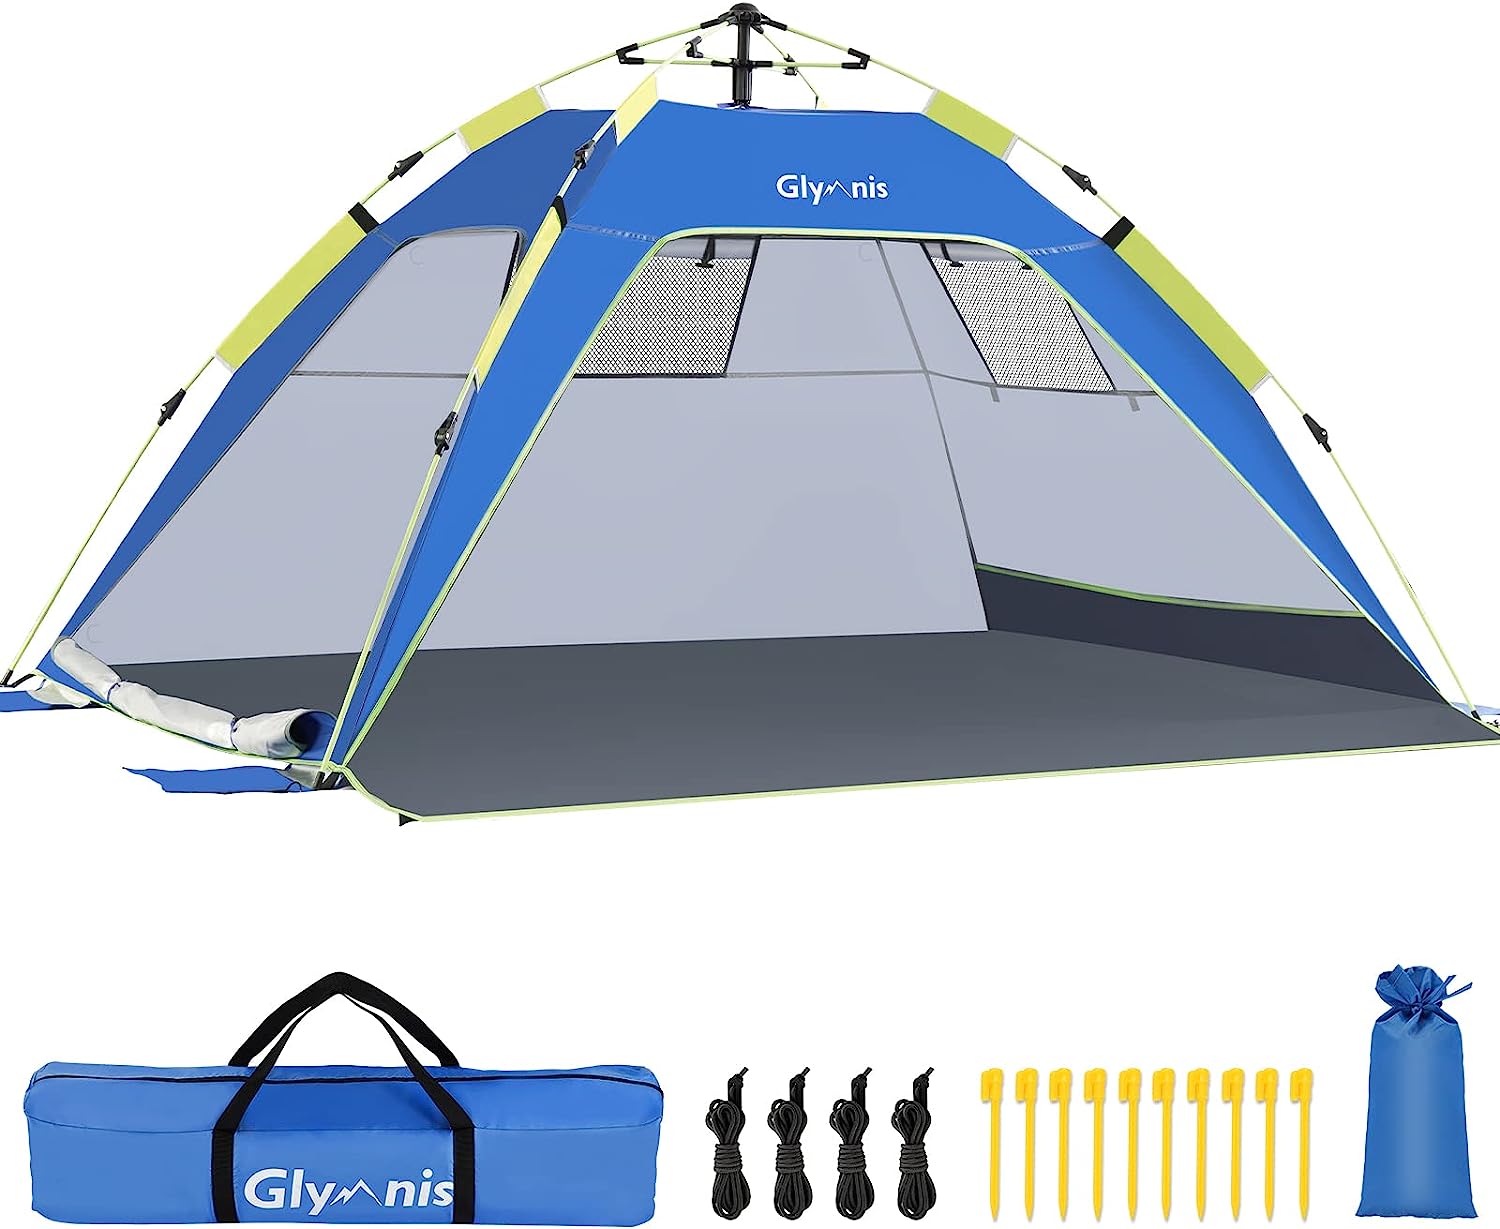 glymnis gazebo tent blue oxford pop up beach tent